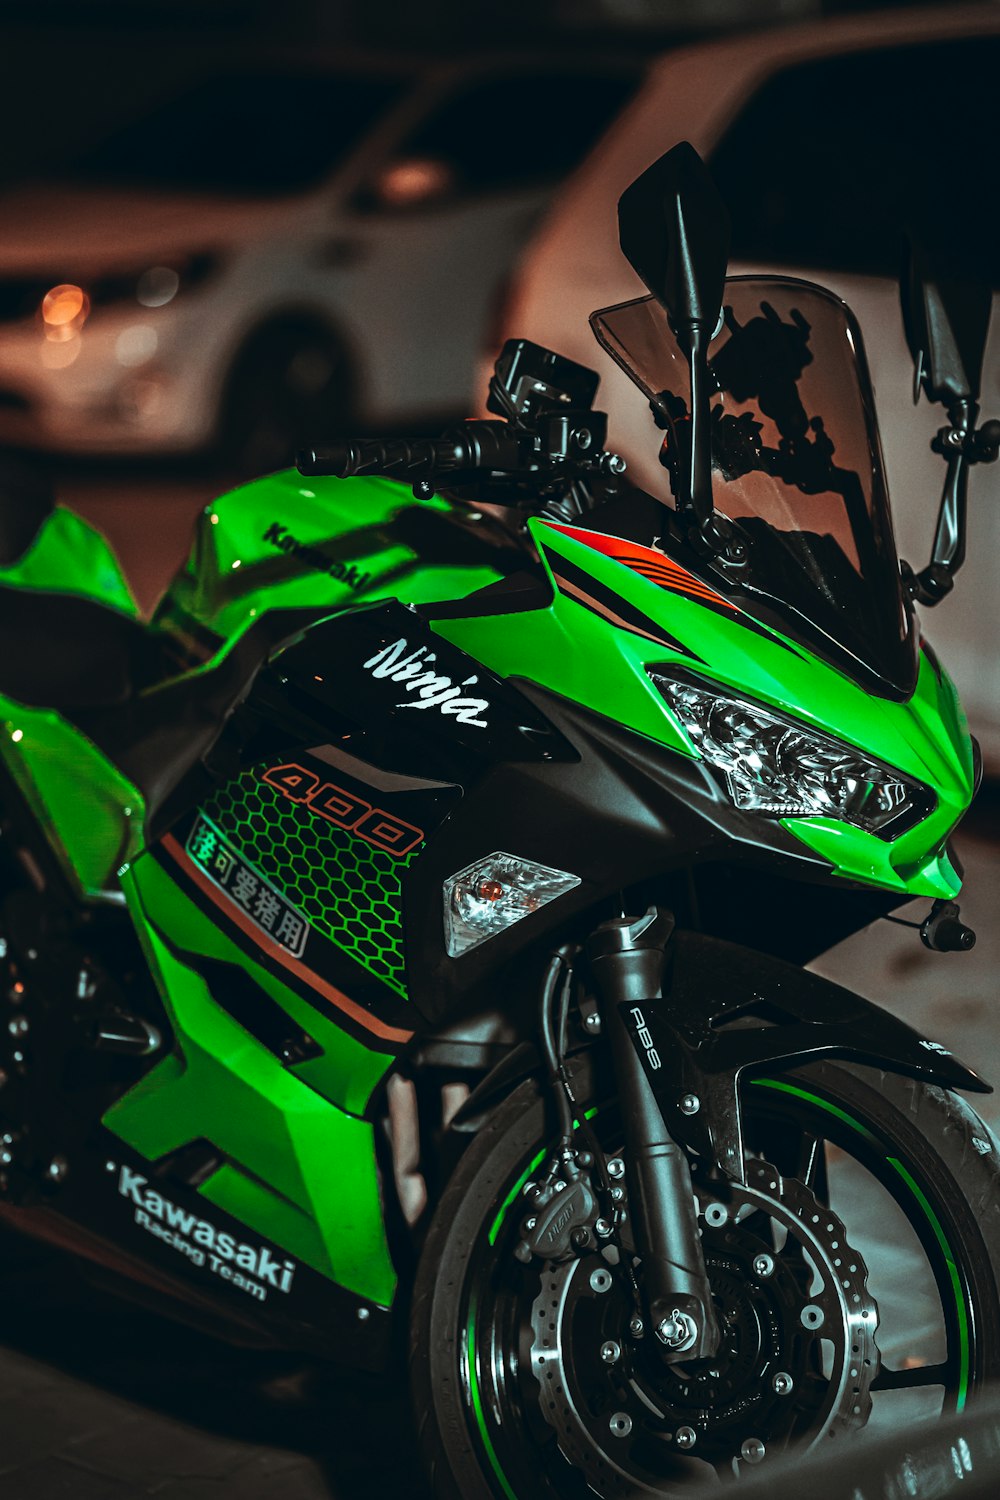 Motocicleta Honda verde y negra